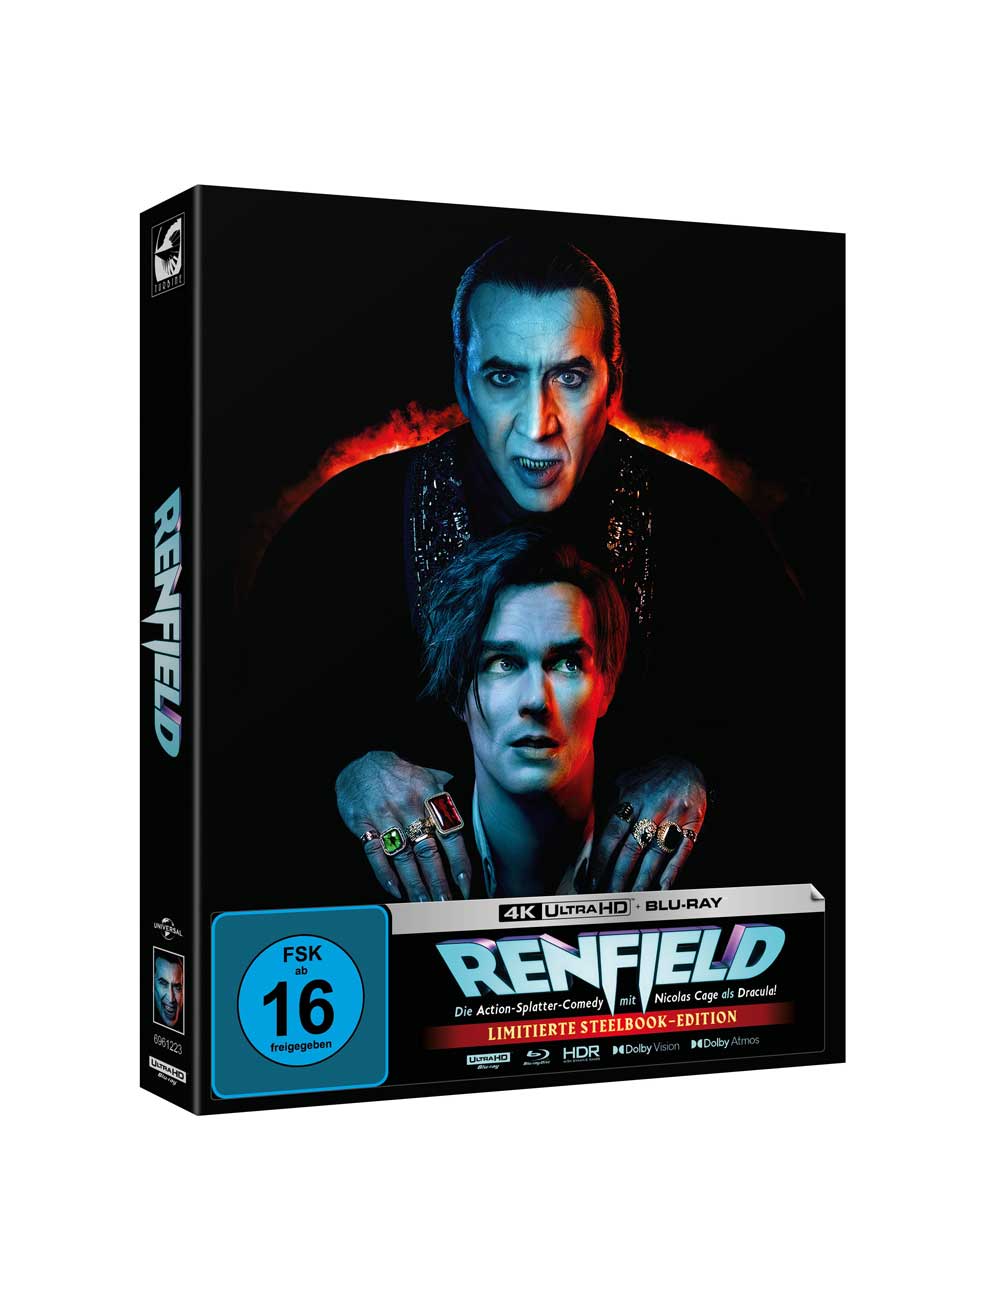 Renfield 4K UHD Blu-Ray Steelbook Limited Edition Full Slip - Preorder